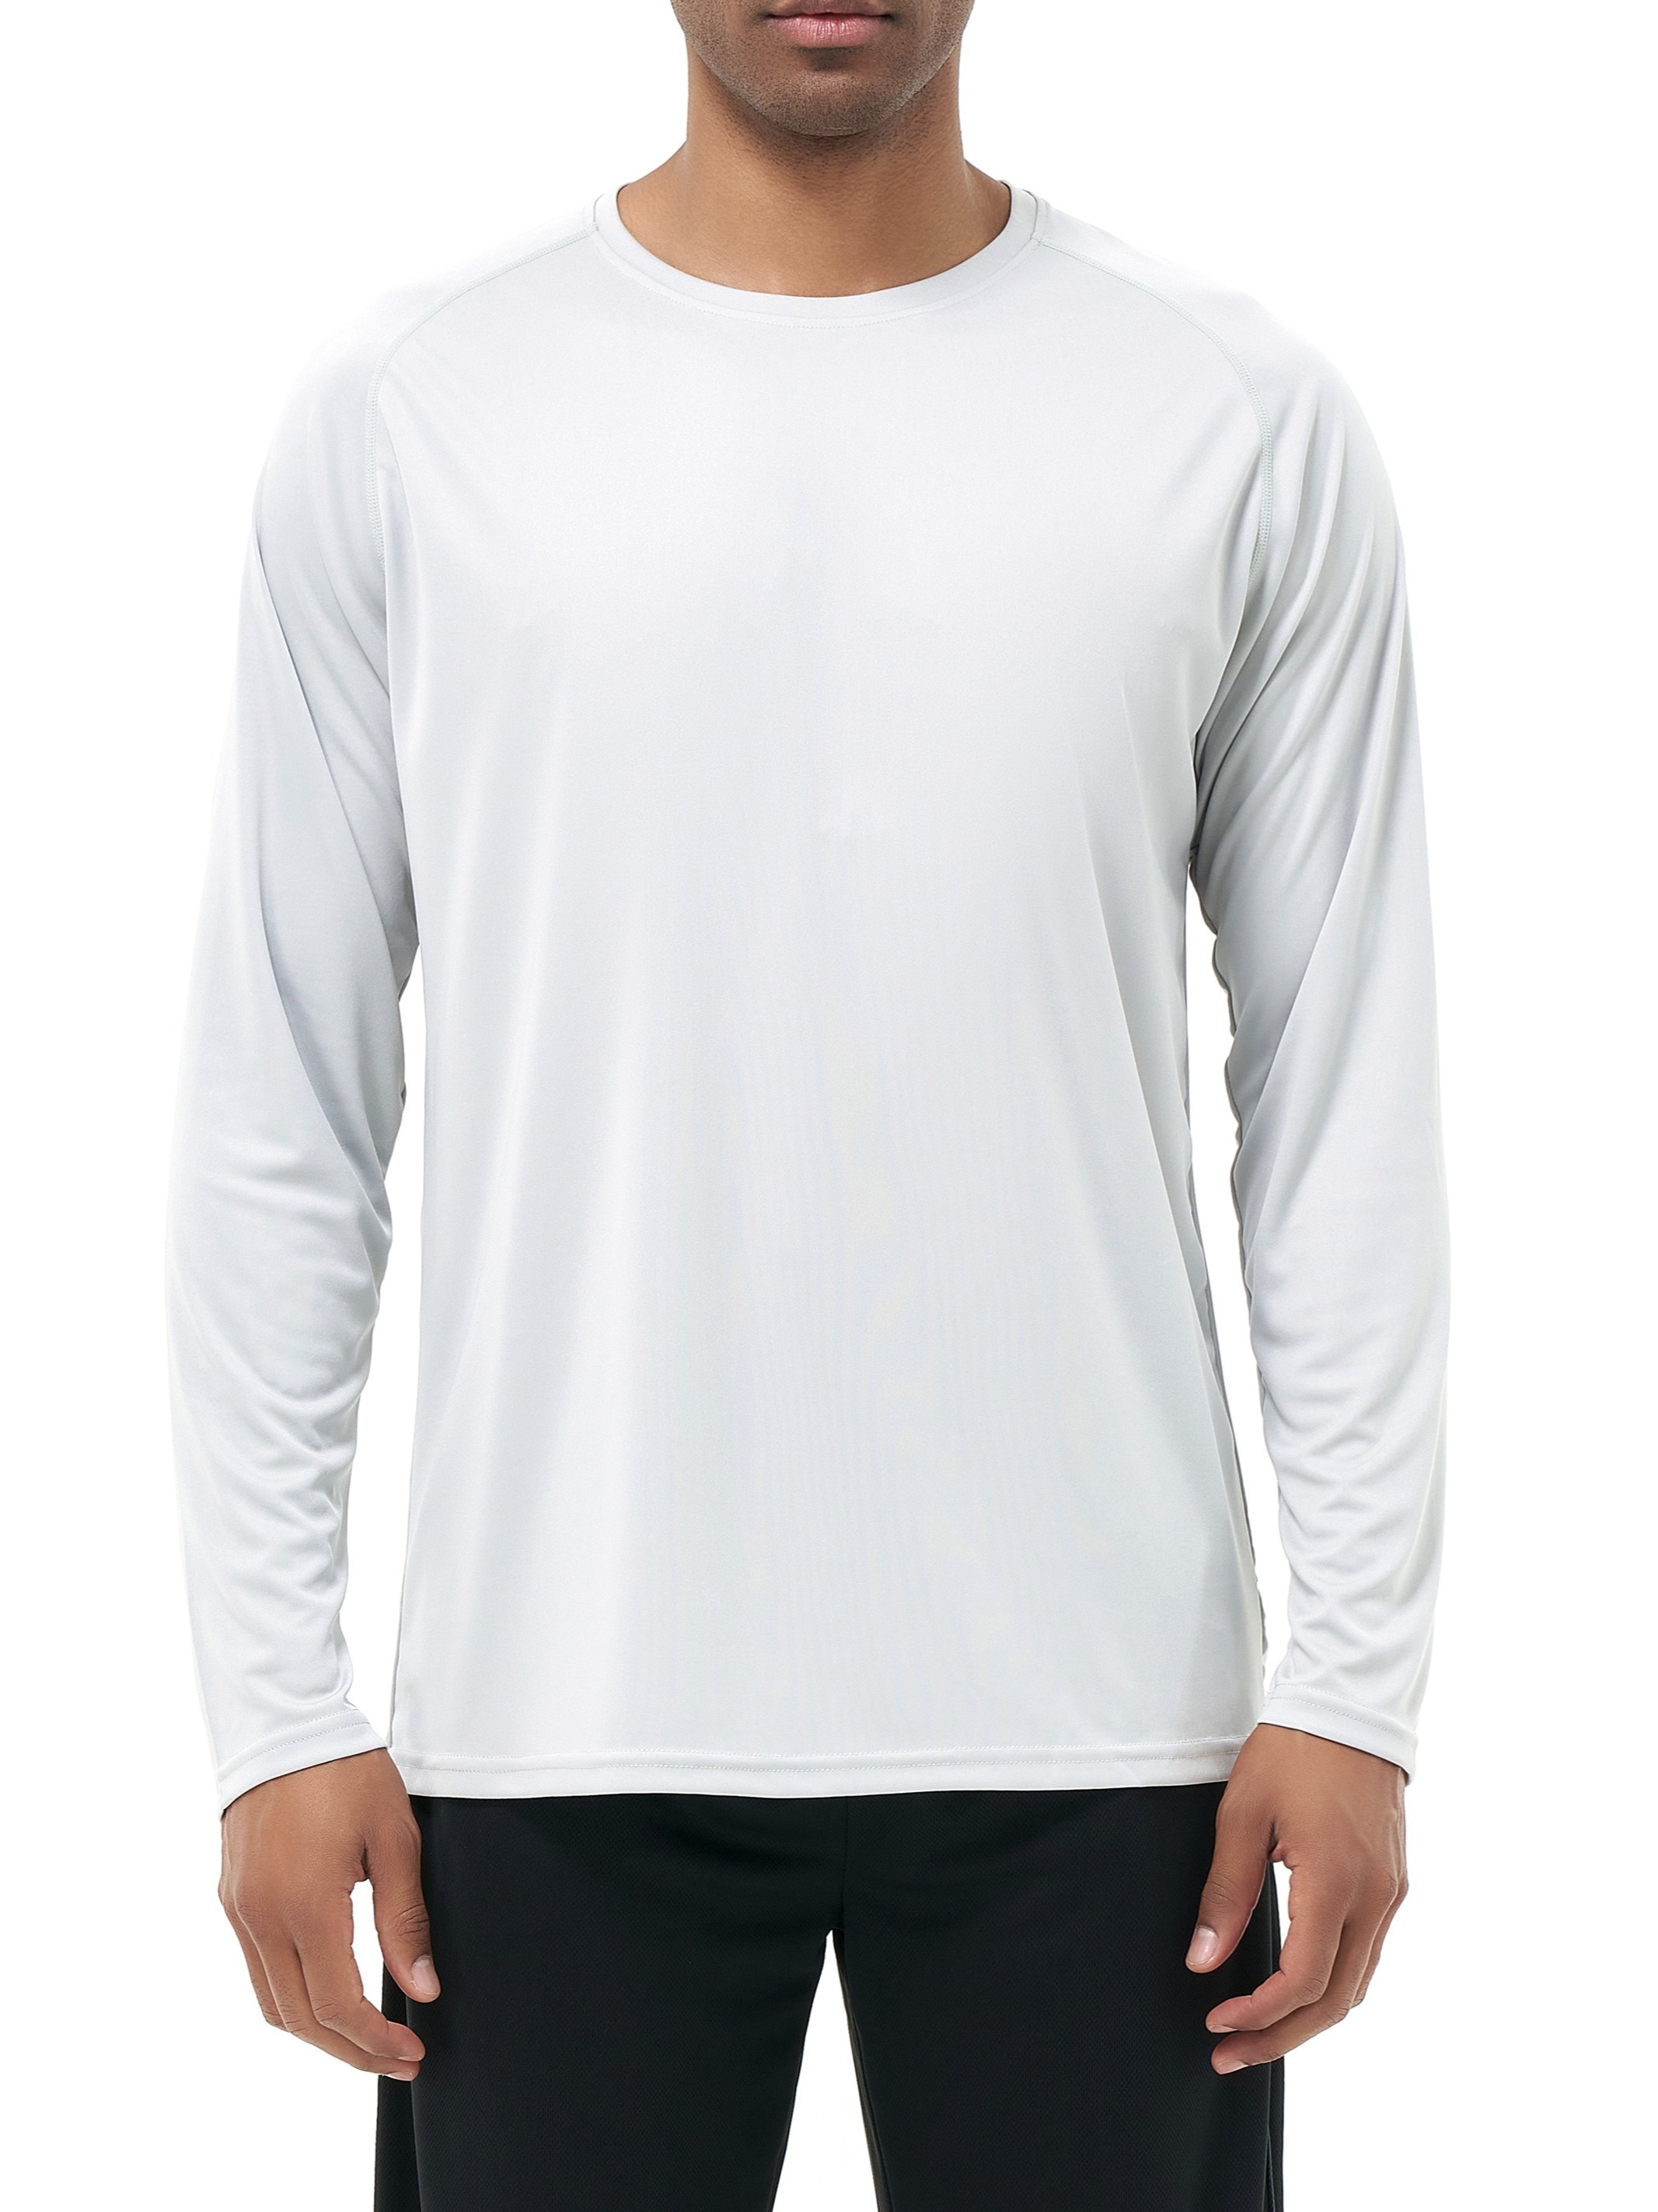 BALEAF Men's 1/4 Zip Pullover Running Shirts Long Sleeved Tops